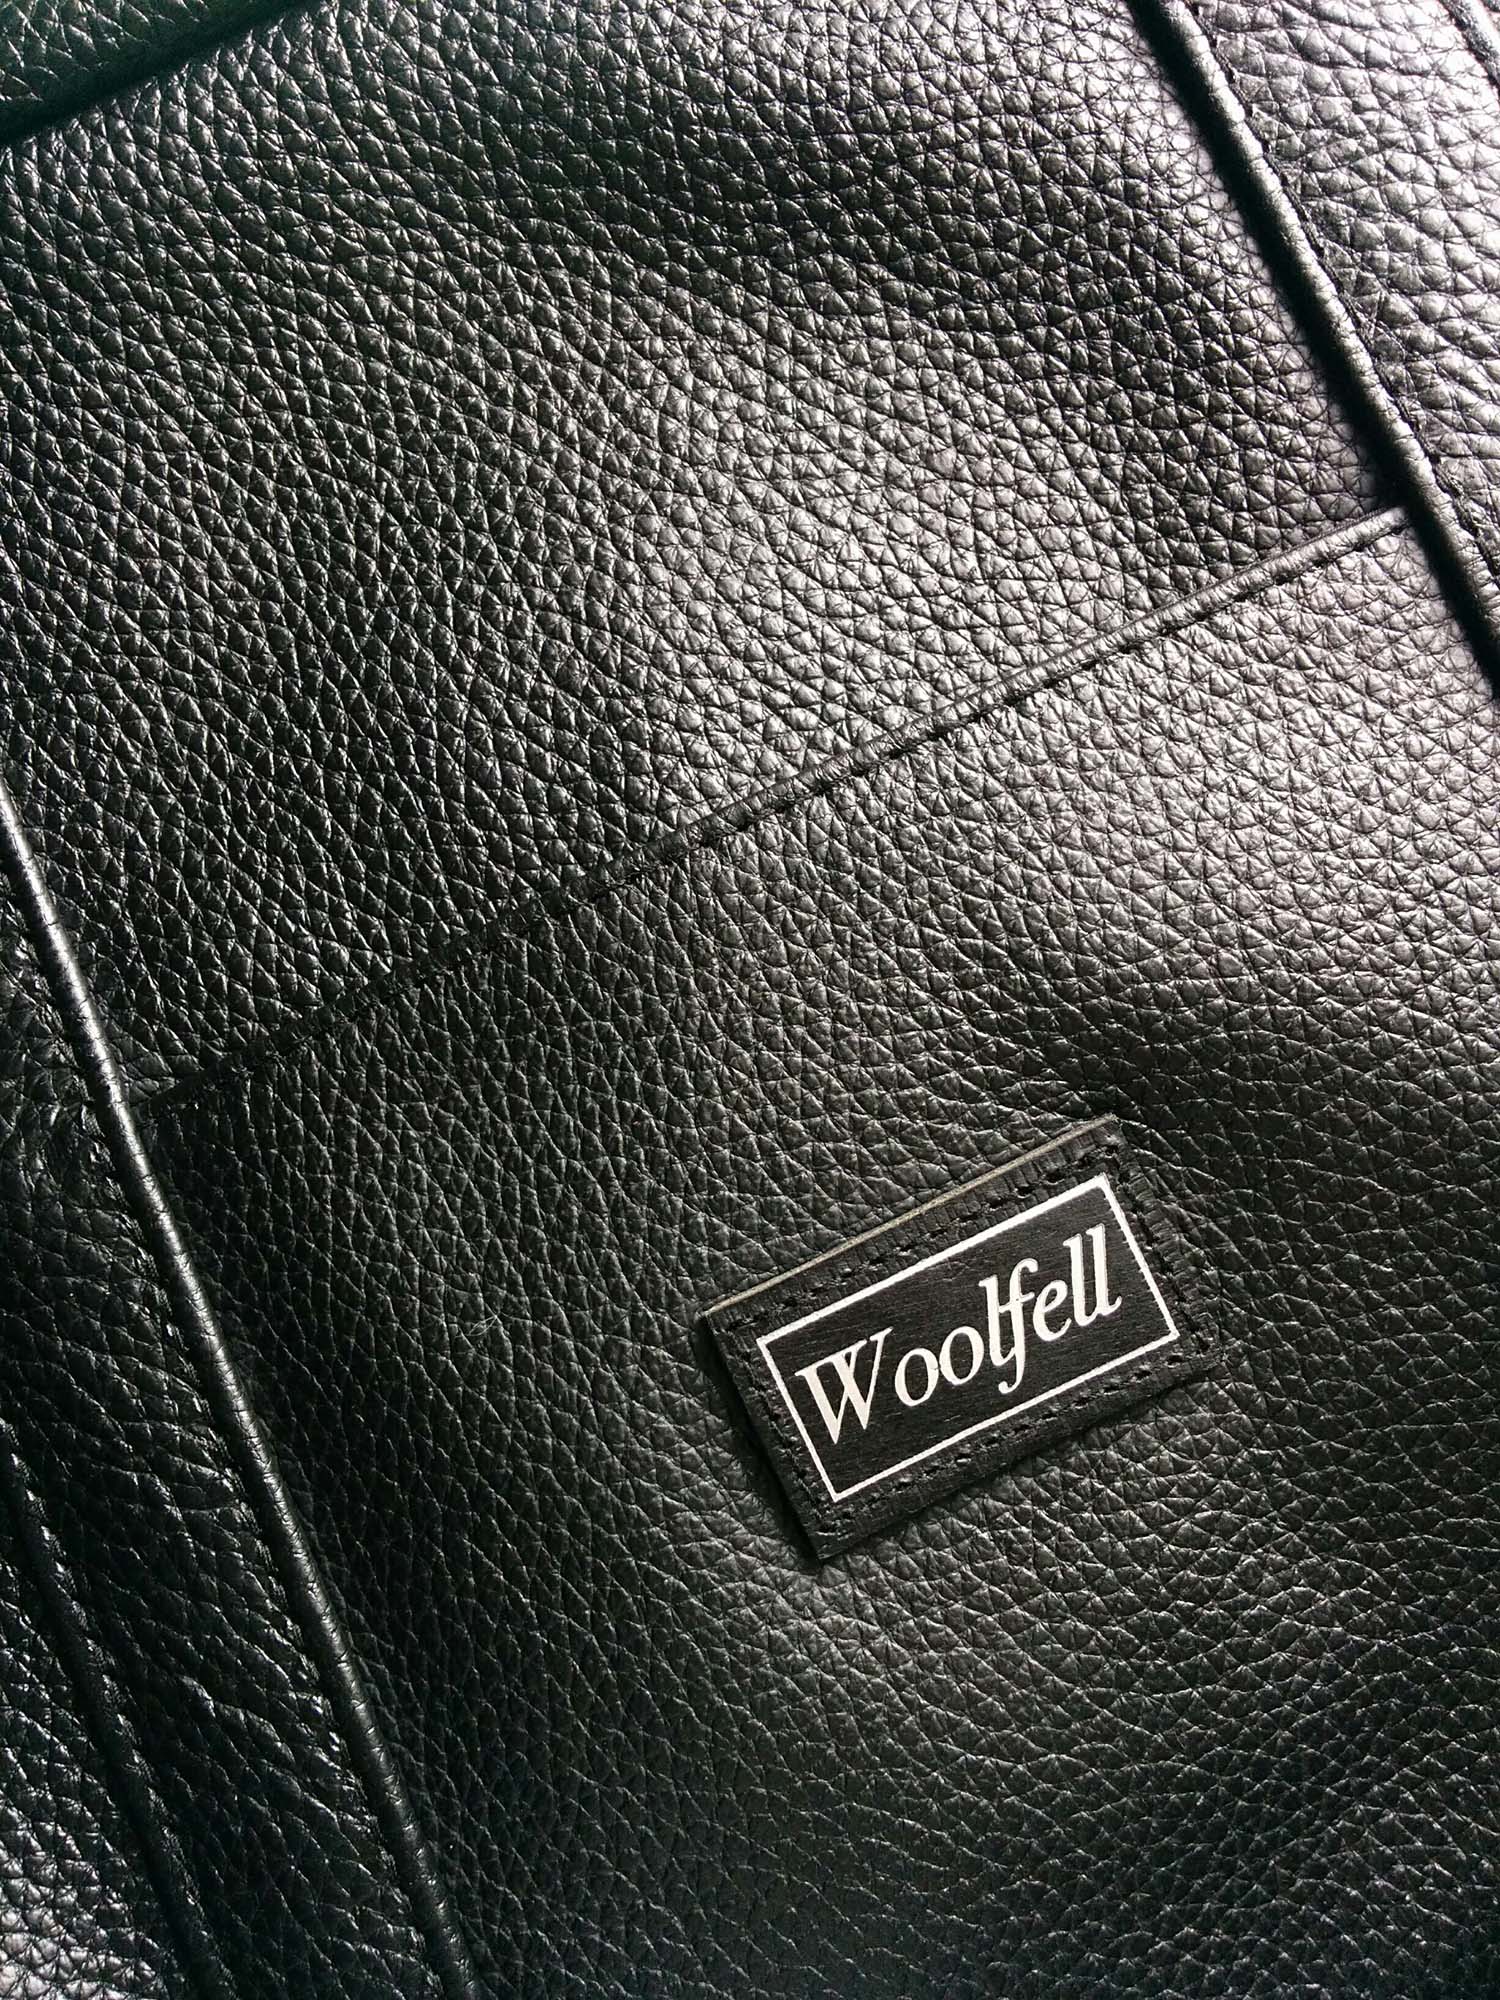 Antagonism reader Release Woolfell | Sacs en cuir de qualité | Quality leather bags